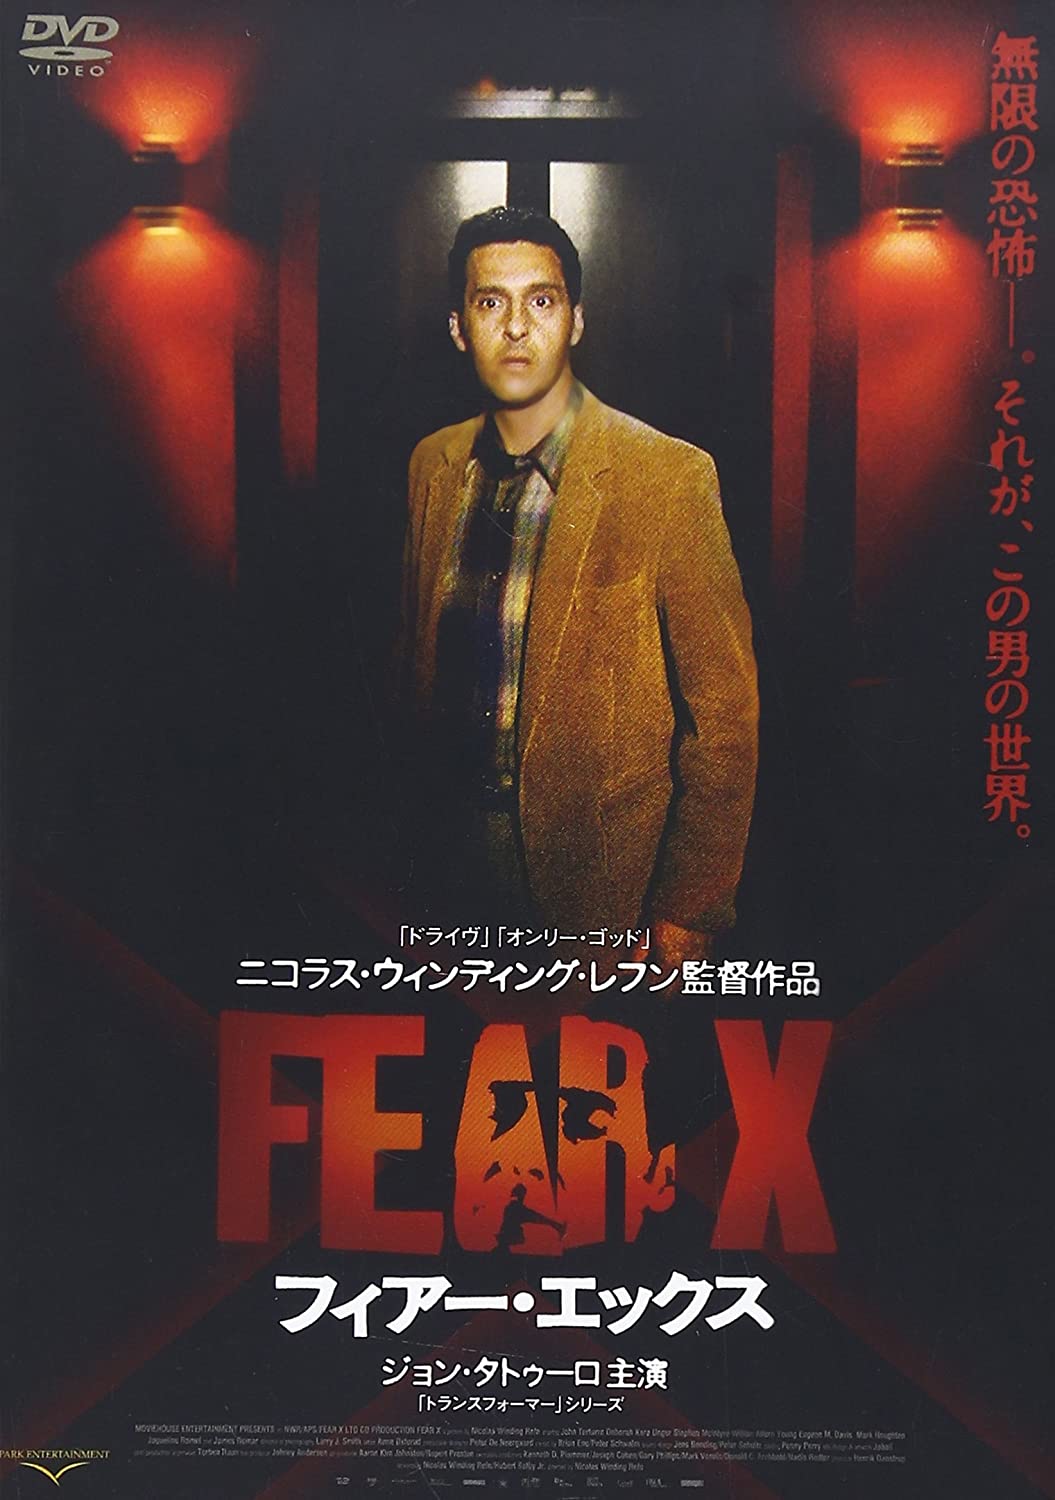 FEAR X　フィアー・エックス